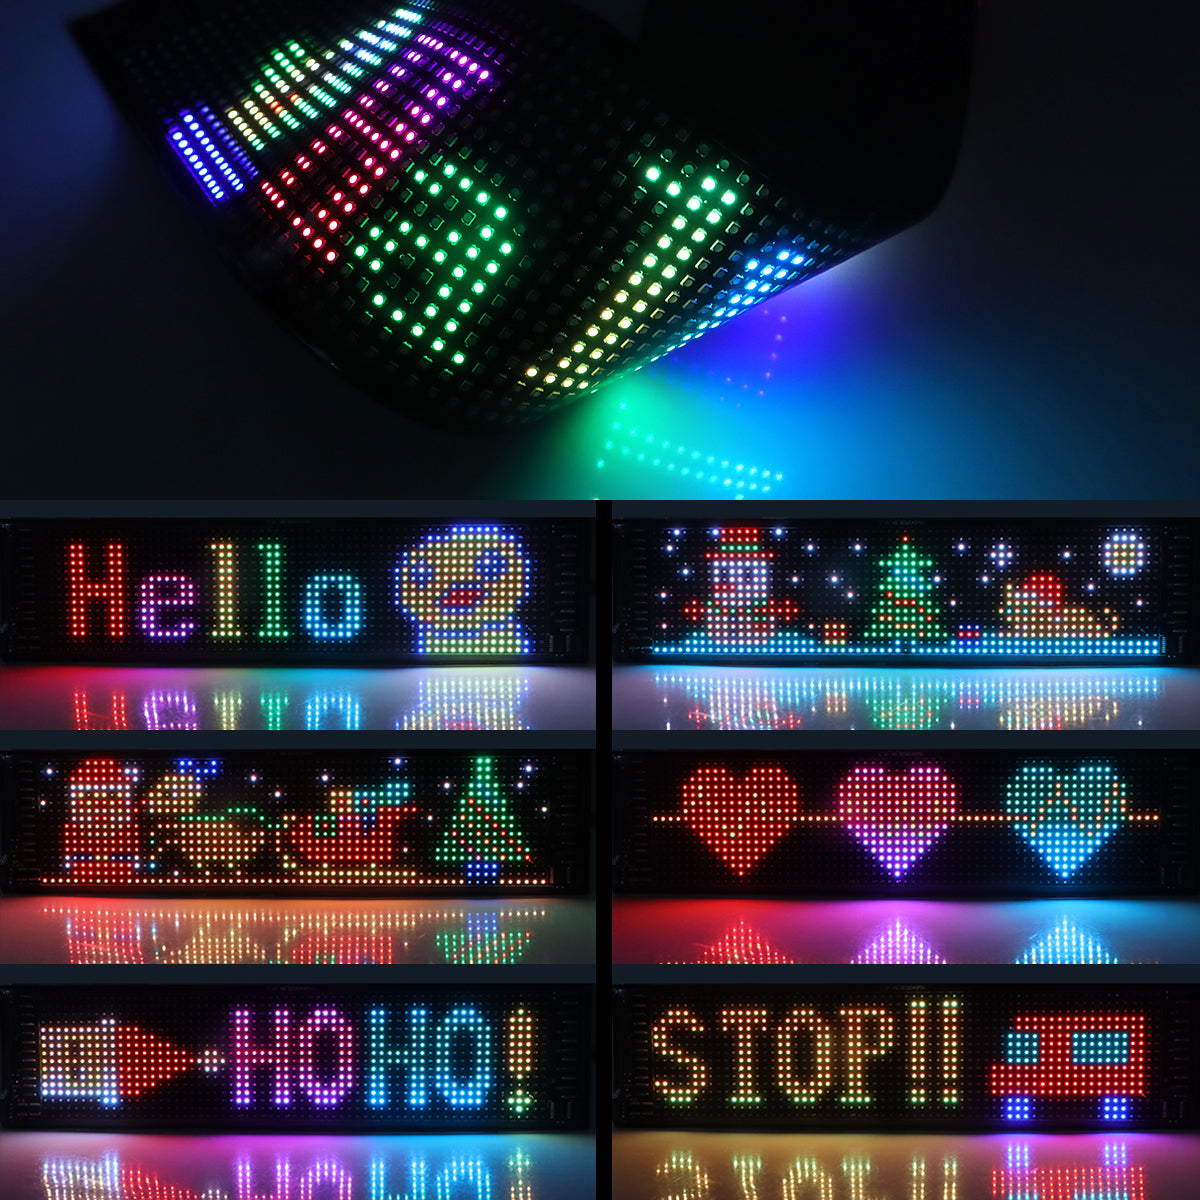 GlowRider™ - LED Display Panel For Car